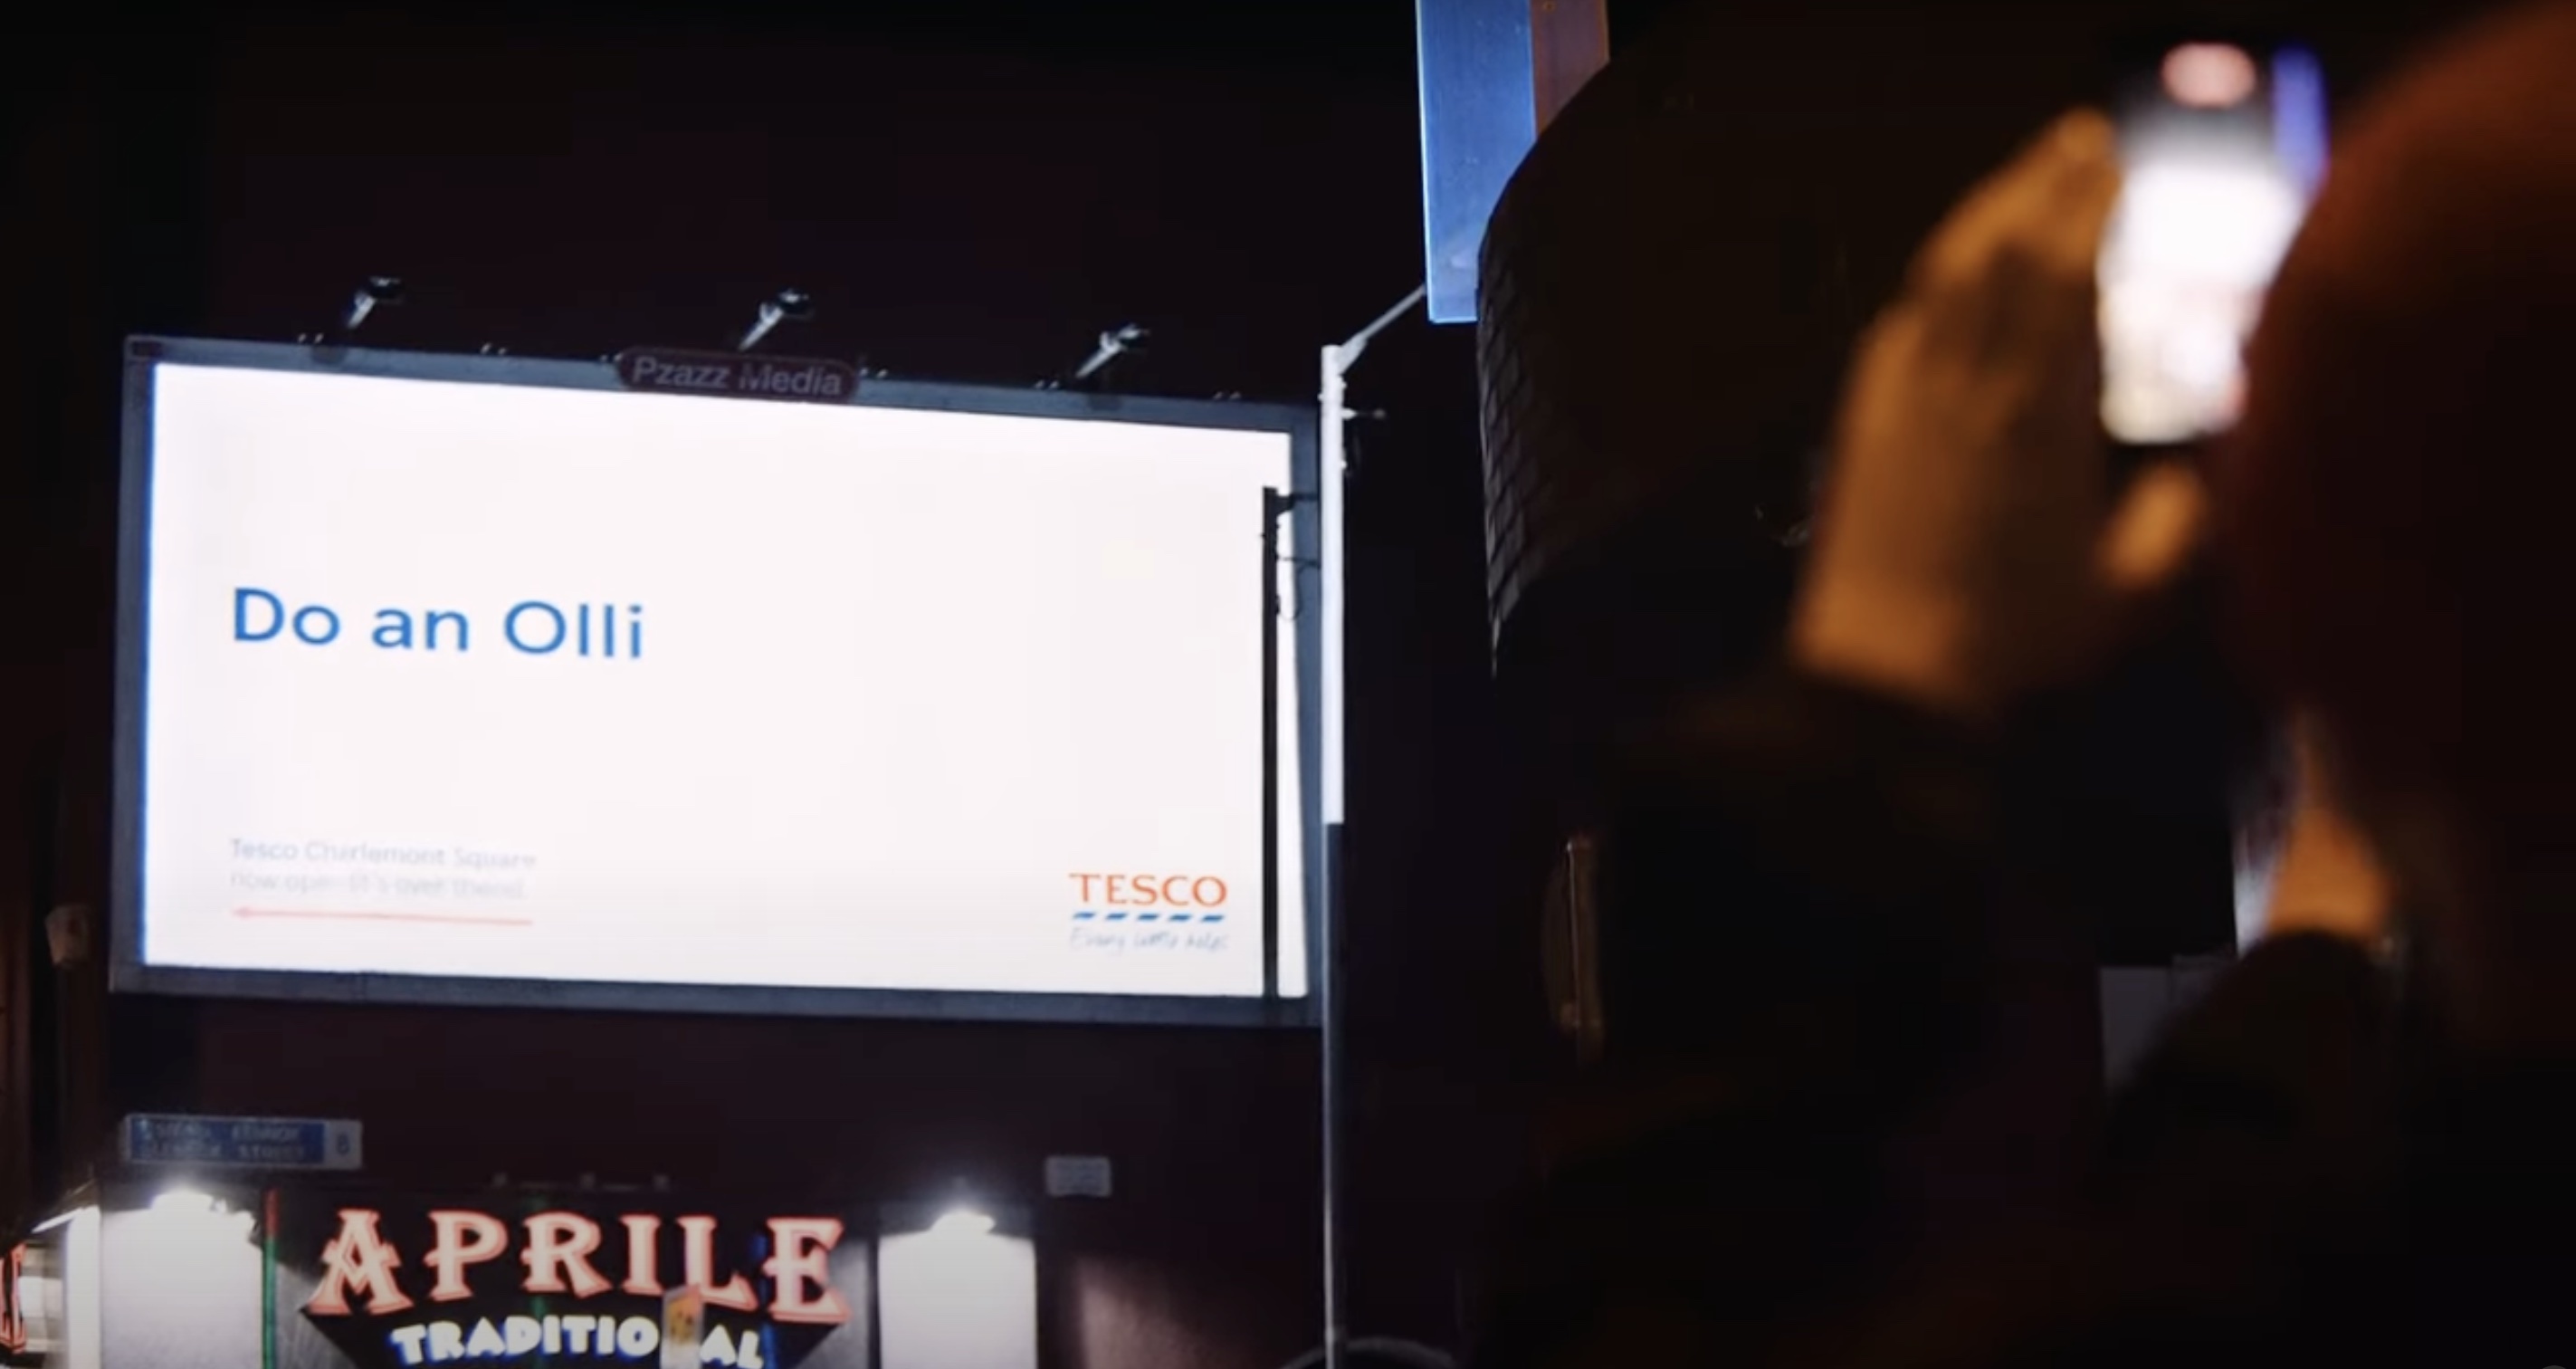 Tesco attire l'attention avec un billboard interpellant (by Focalys)